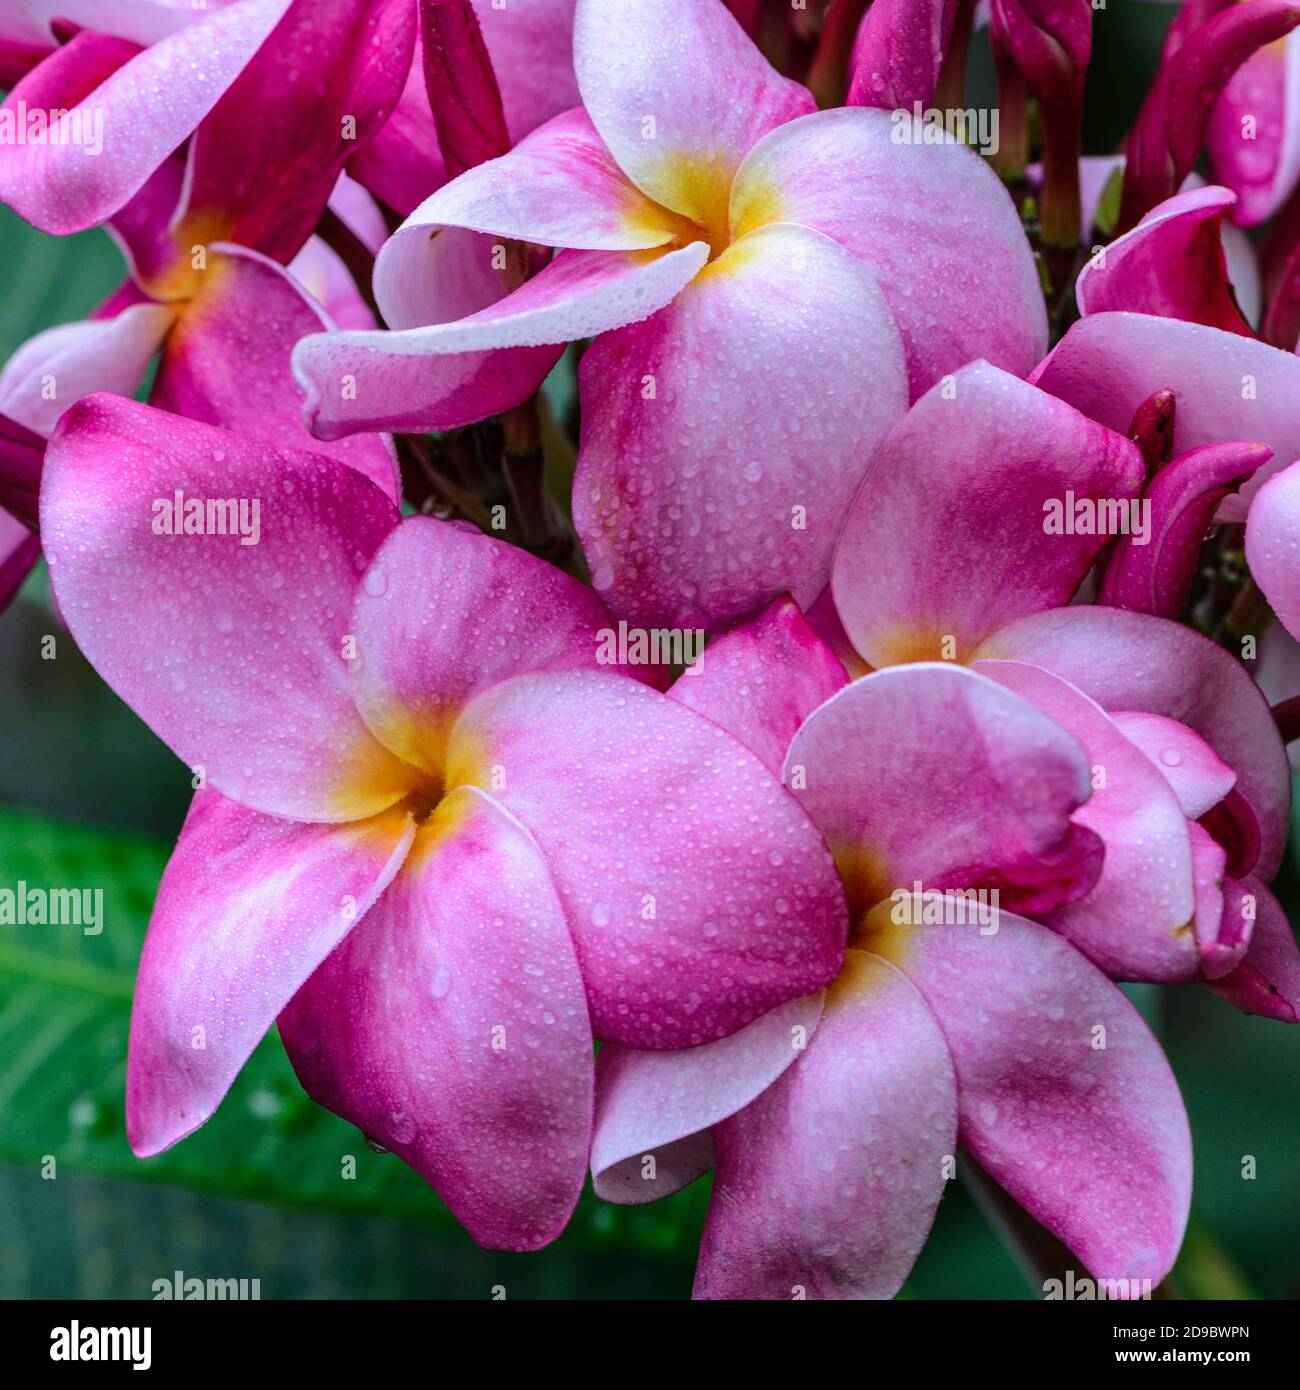 Rosa Plumeria oder Frangipani Blumen Stockfoto